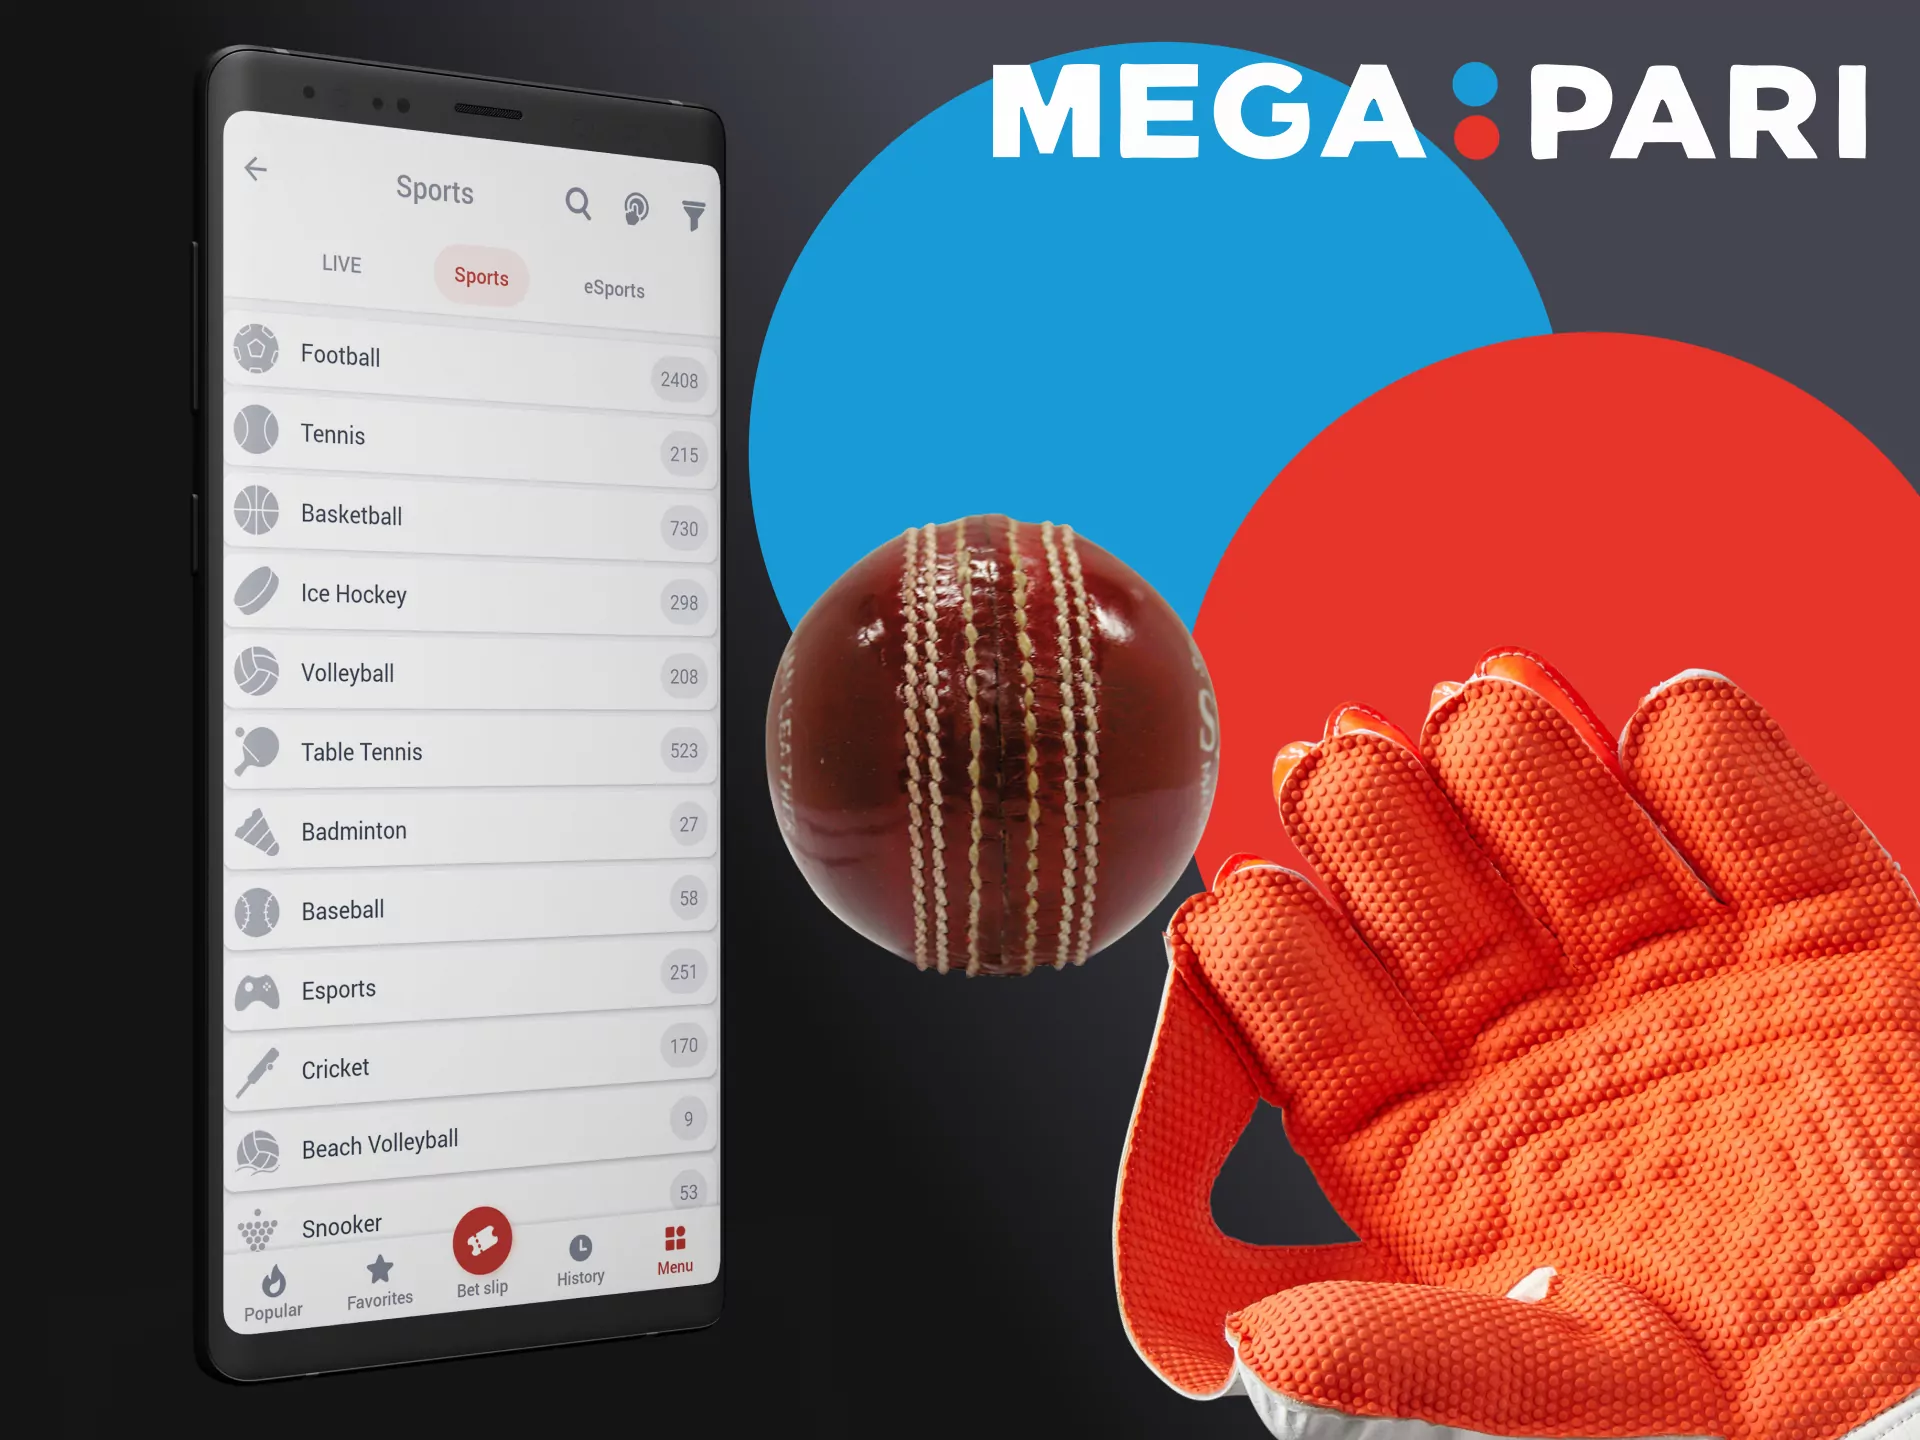 Choose your favorite sport for betting on Megapari.